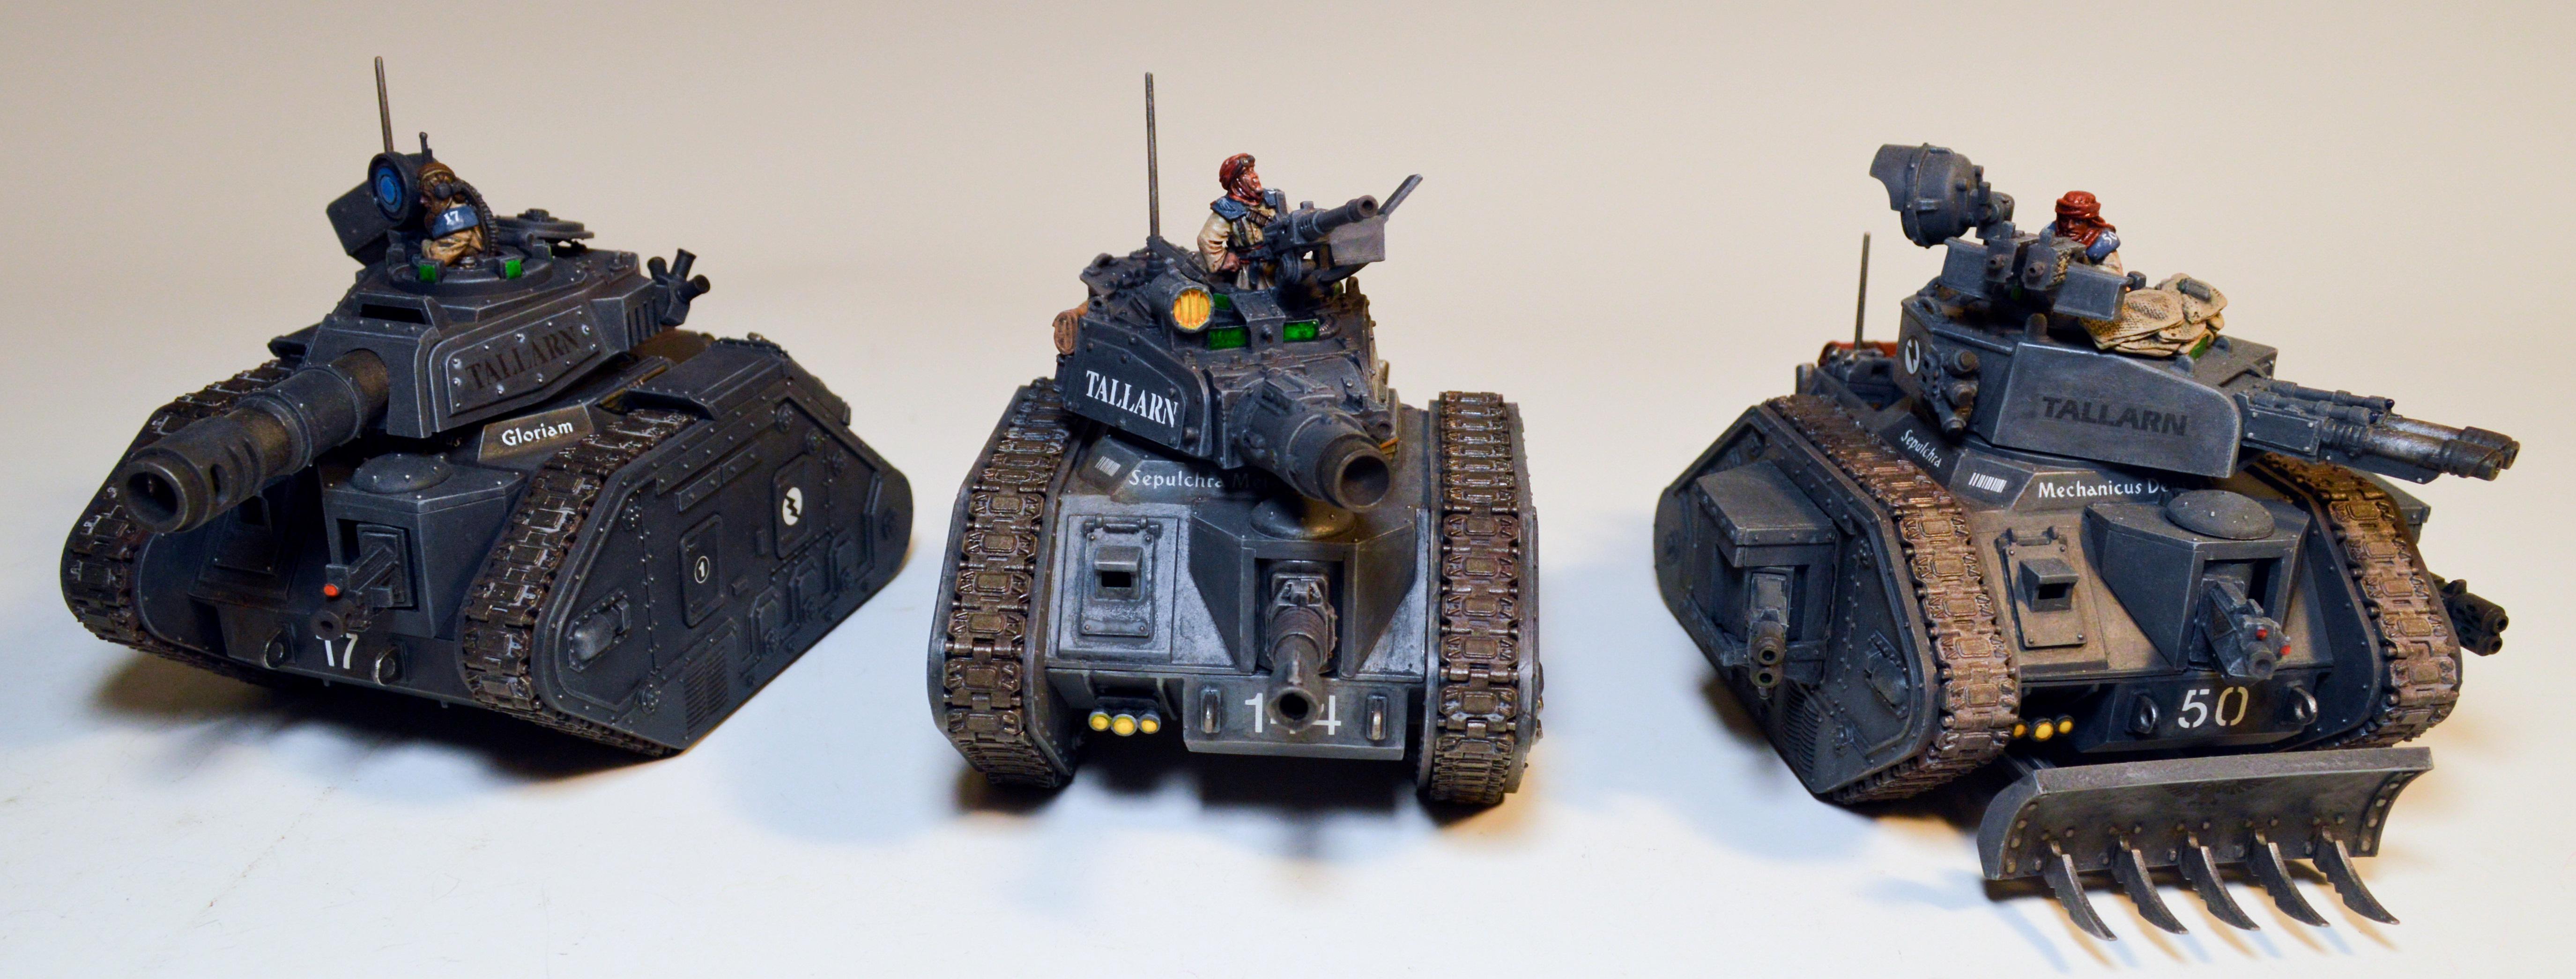 Astra Militarum, Imperial Guard, Leman Russ Battle Tank, Tallarn Desert Raiders